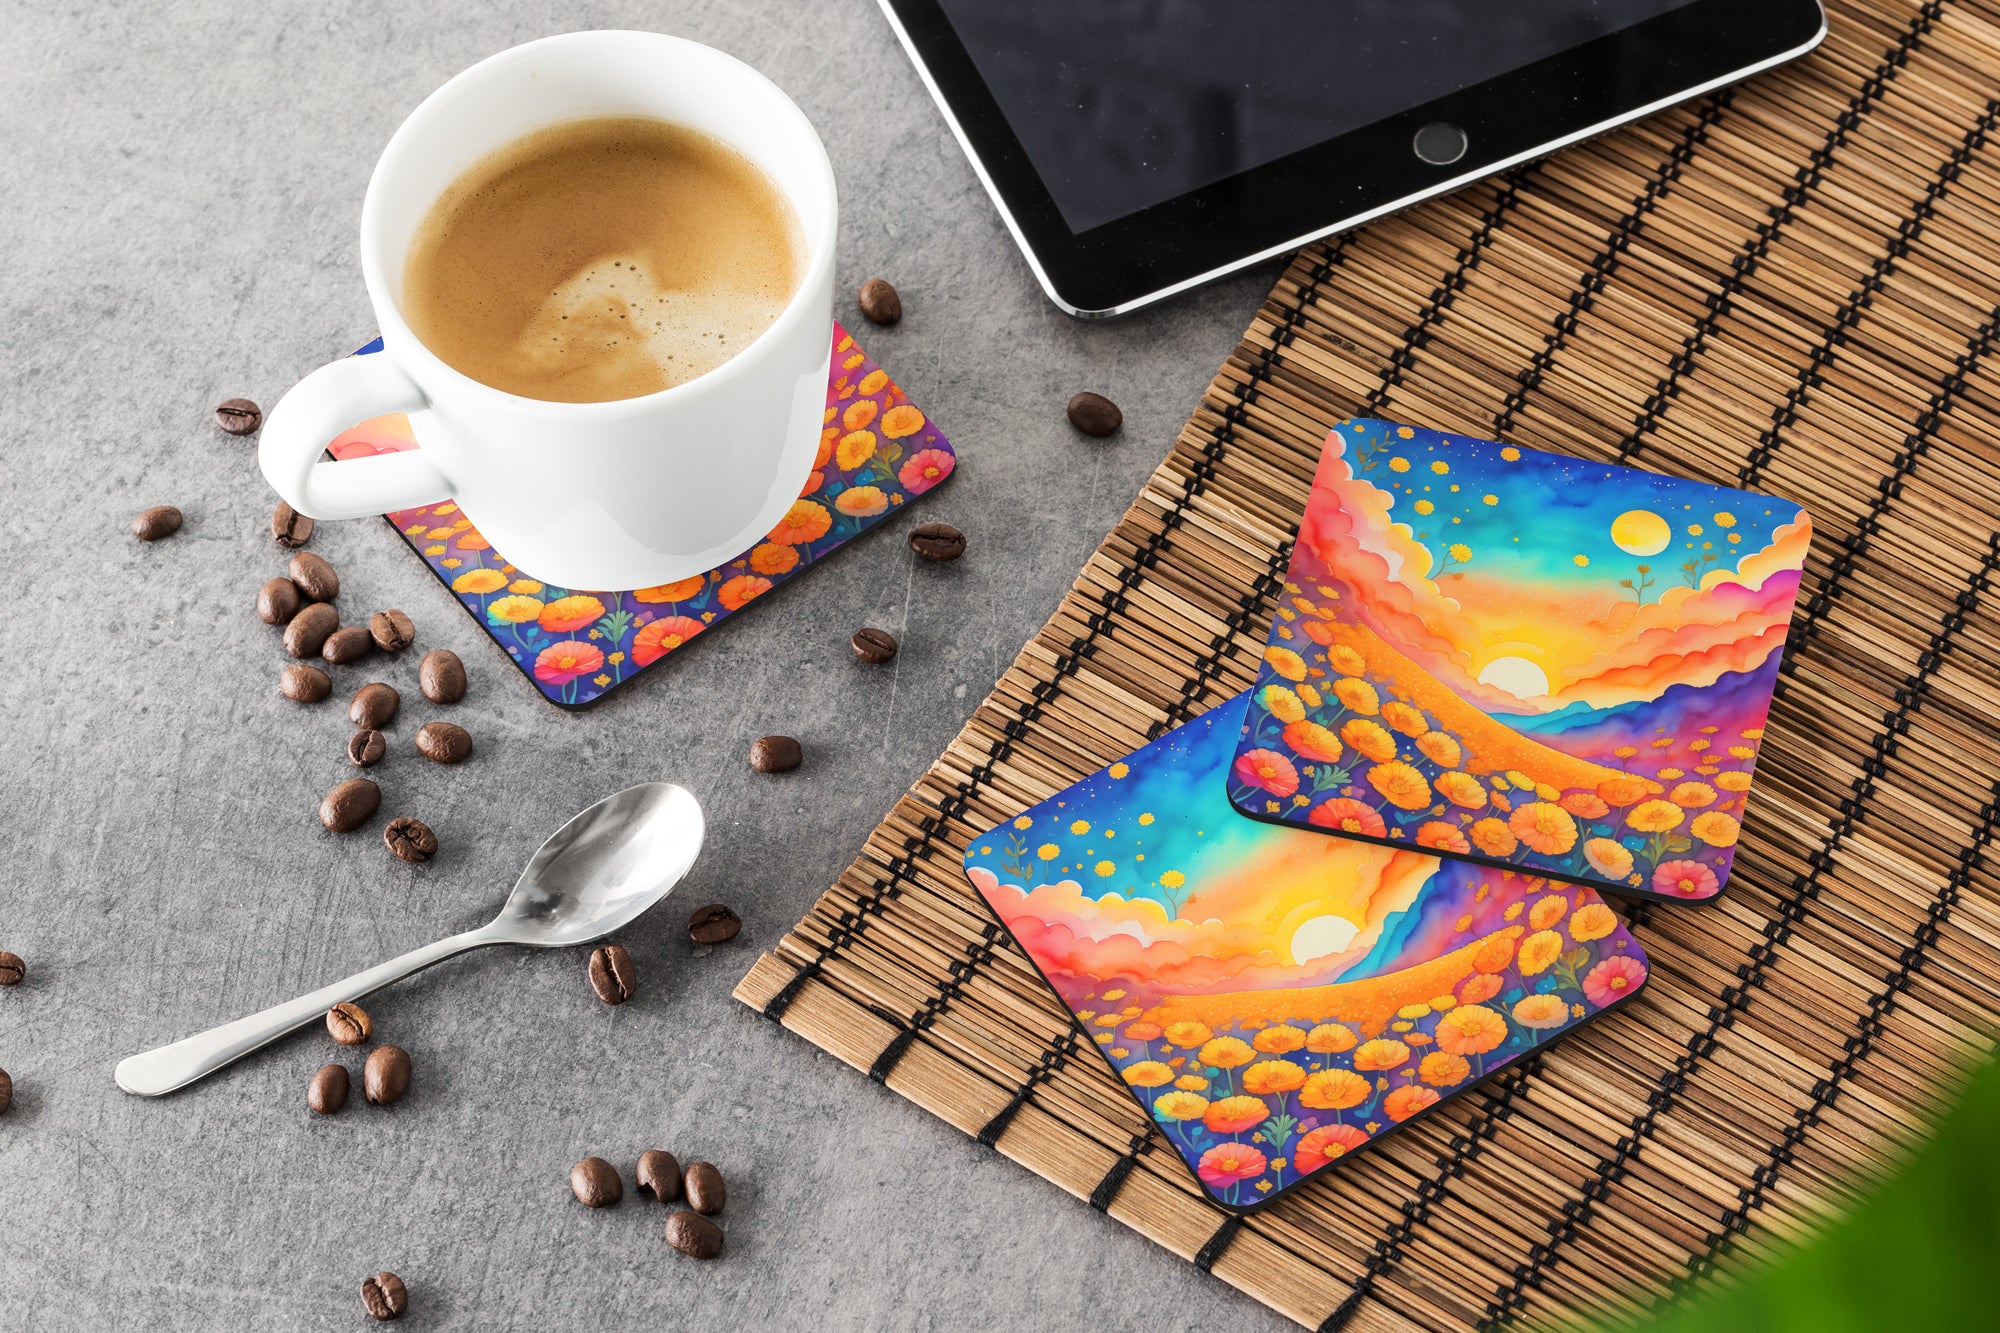 Colorful Marigolds Foam Coaster Set of 4